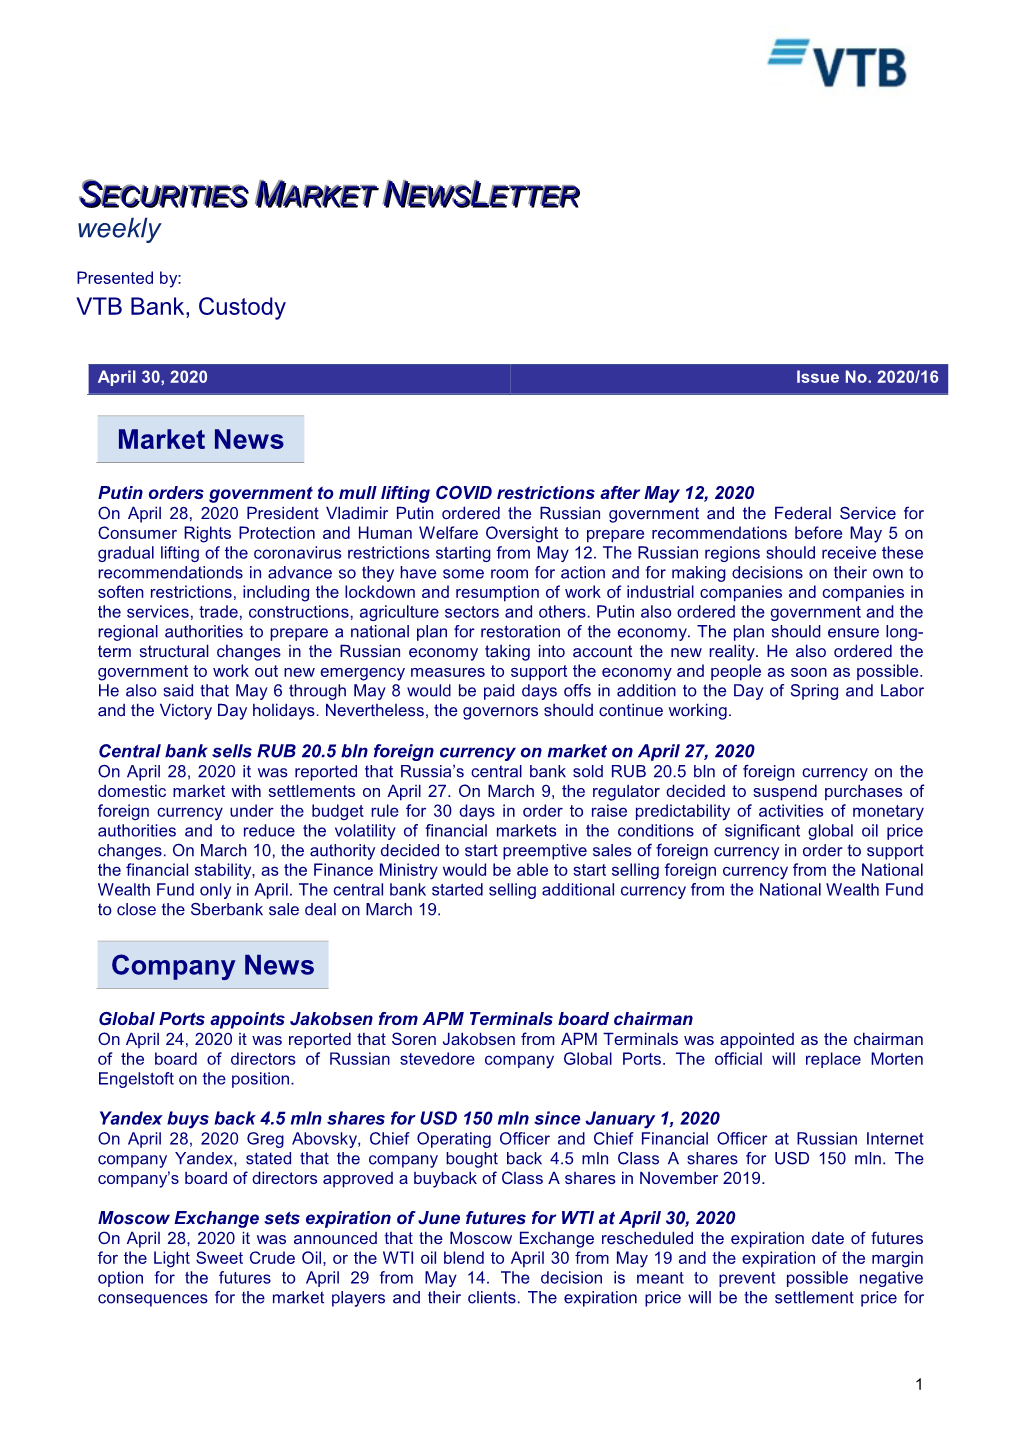 Market News Company News SECURITIES MARKET NEWS